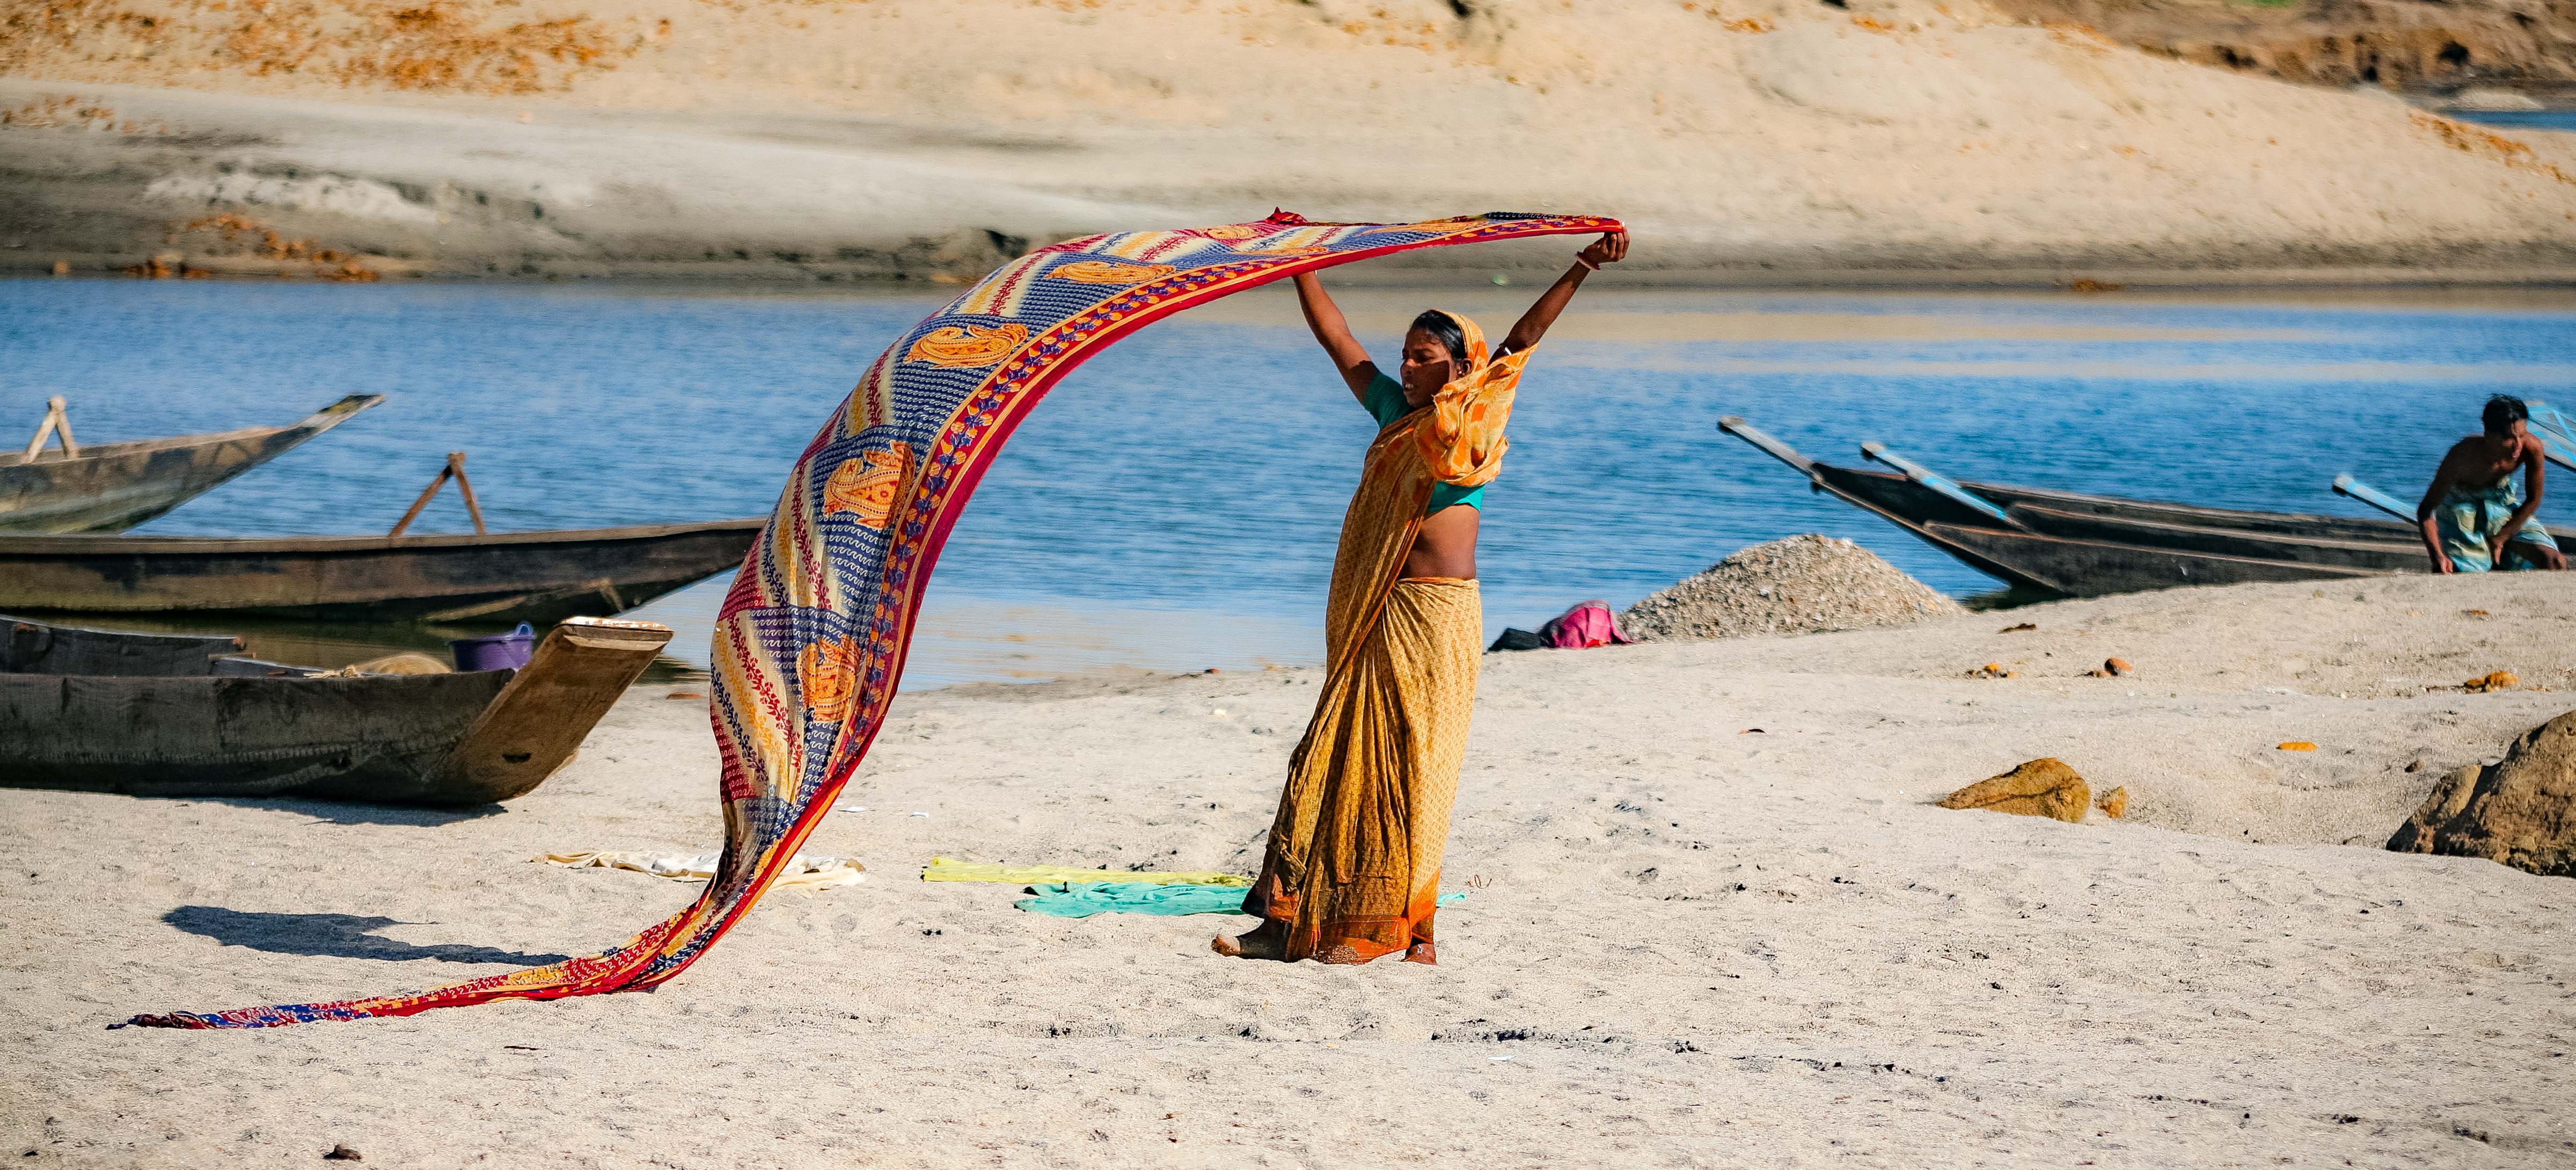 Bangladesh, Sylhet Prov, Woman Drying Cloth, 2009, IMG 8211